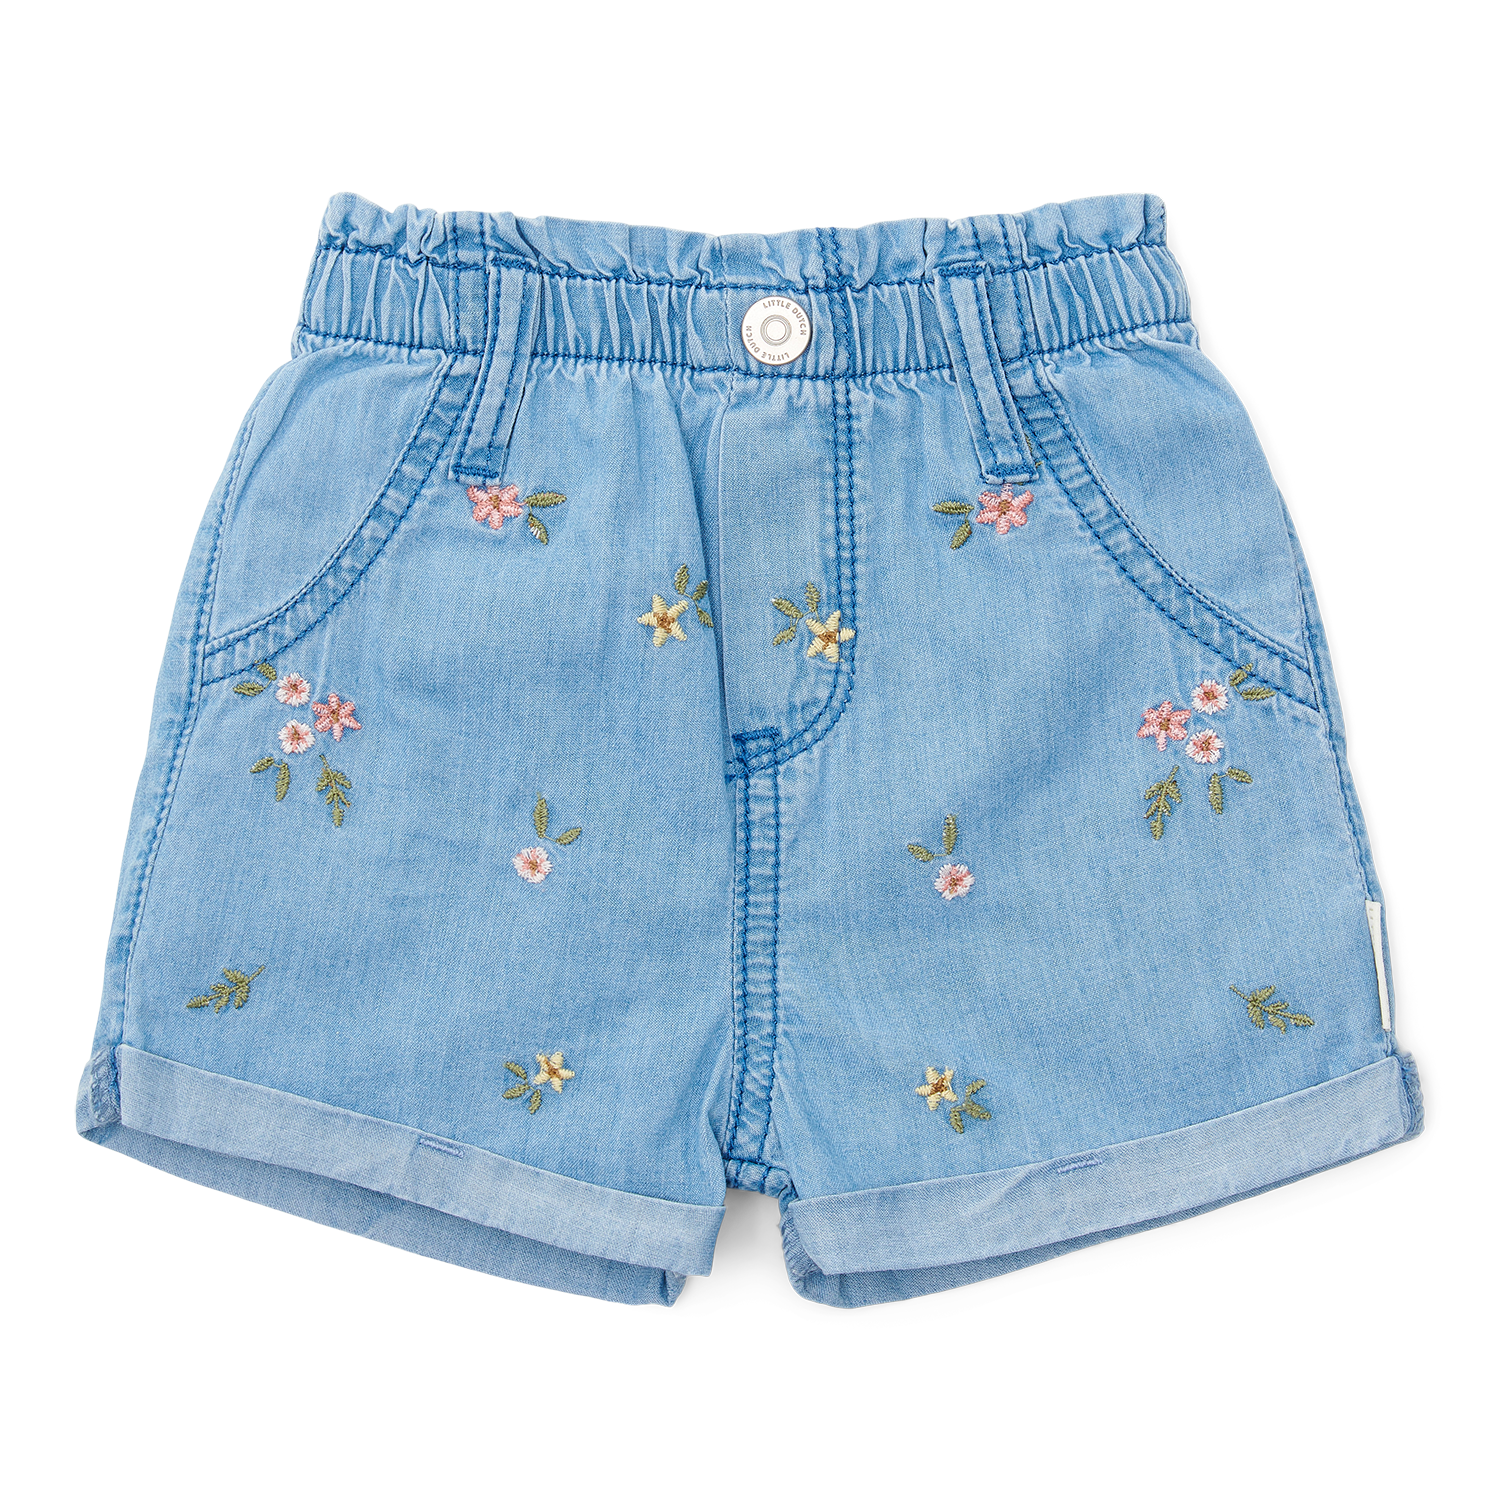 Kurze Hose / Shorts Denim Little Farm jeans (Gr. 92)